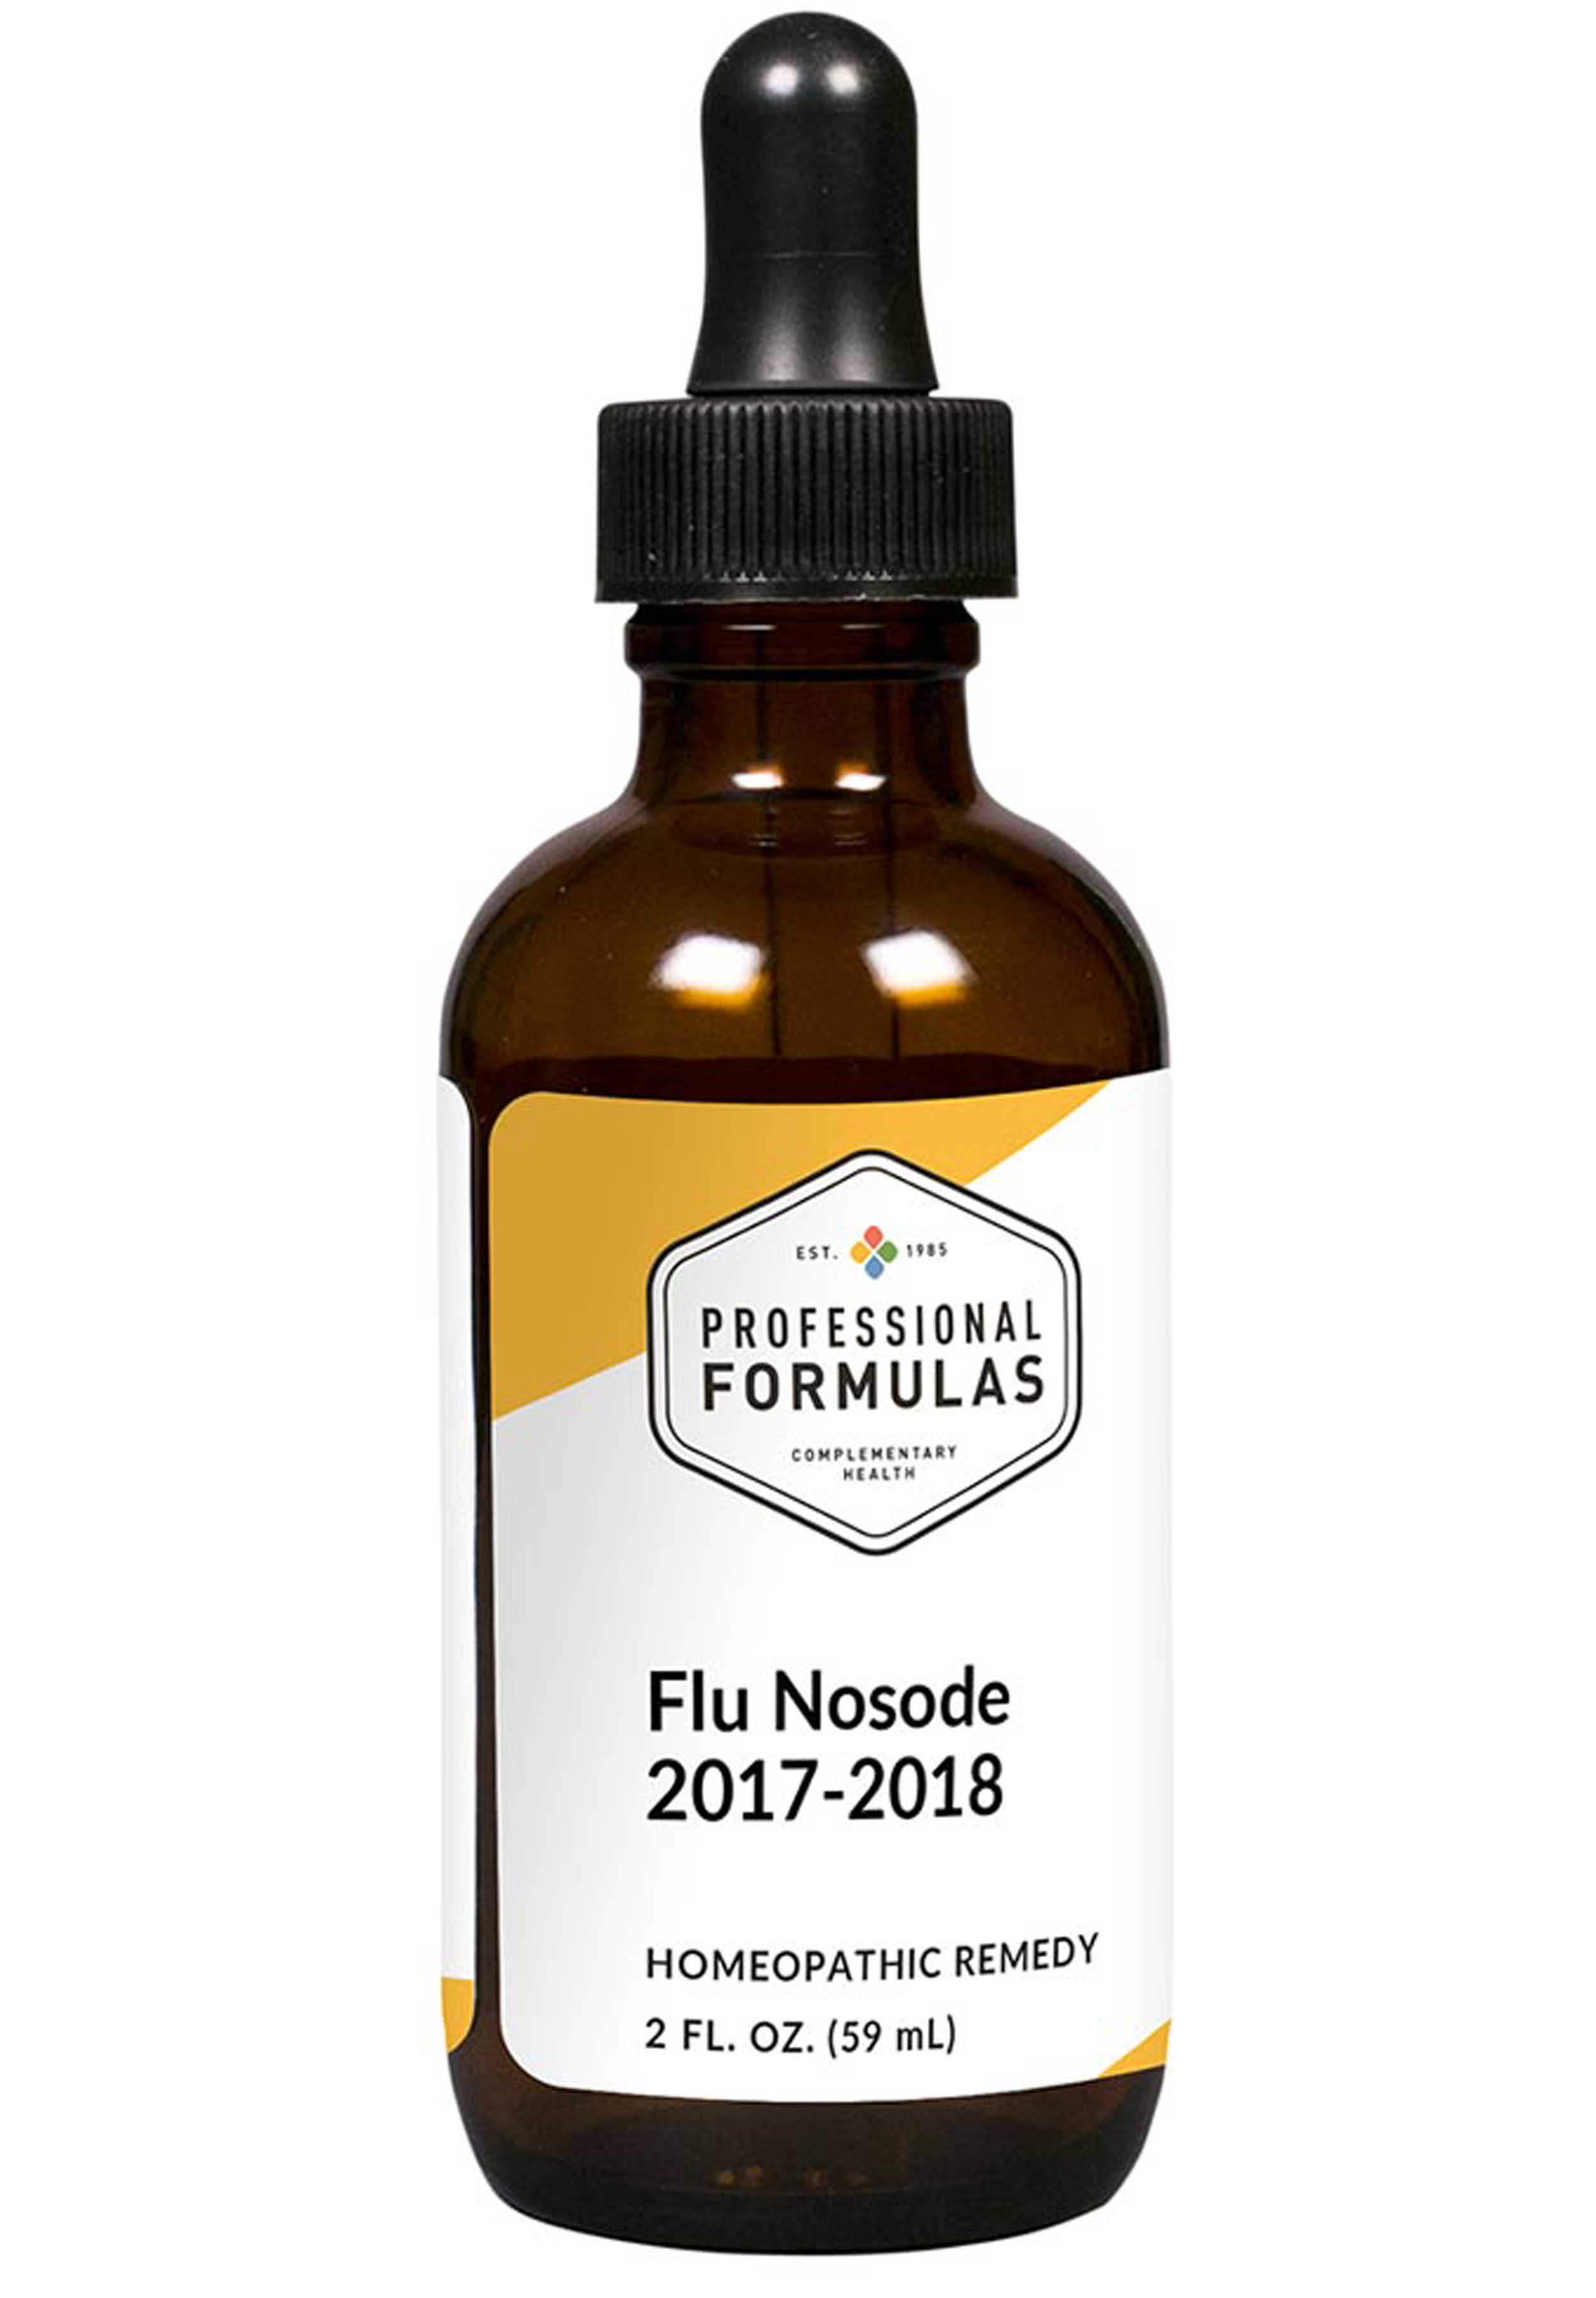 Professional Formulas Flu Nosode (2017-2018)